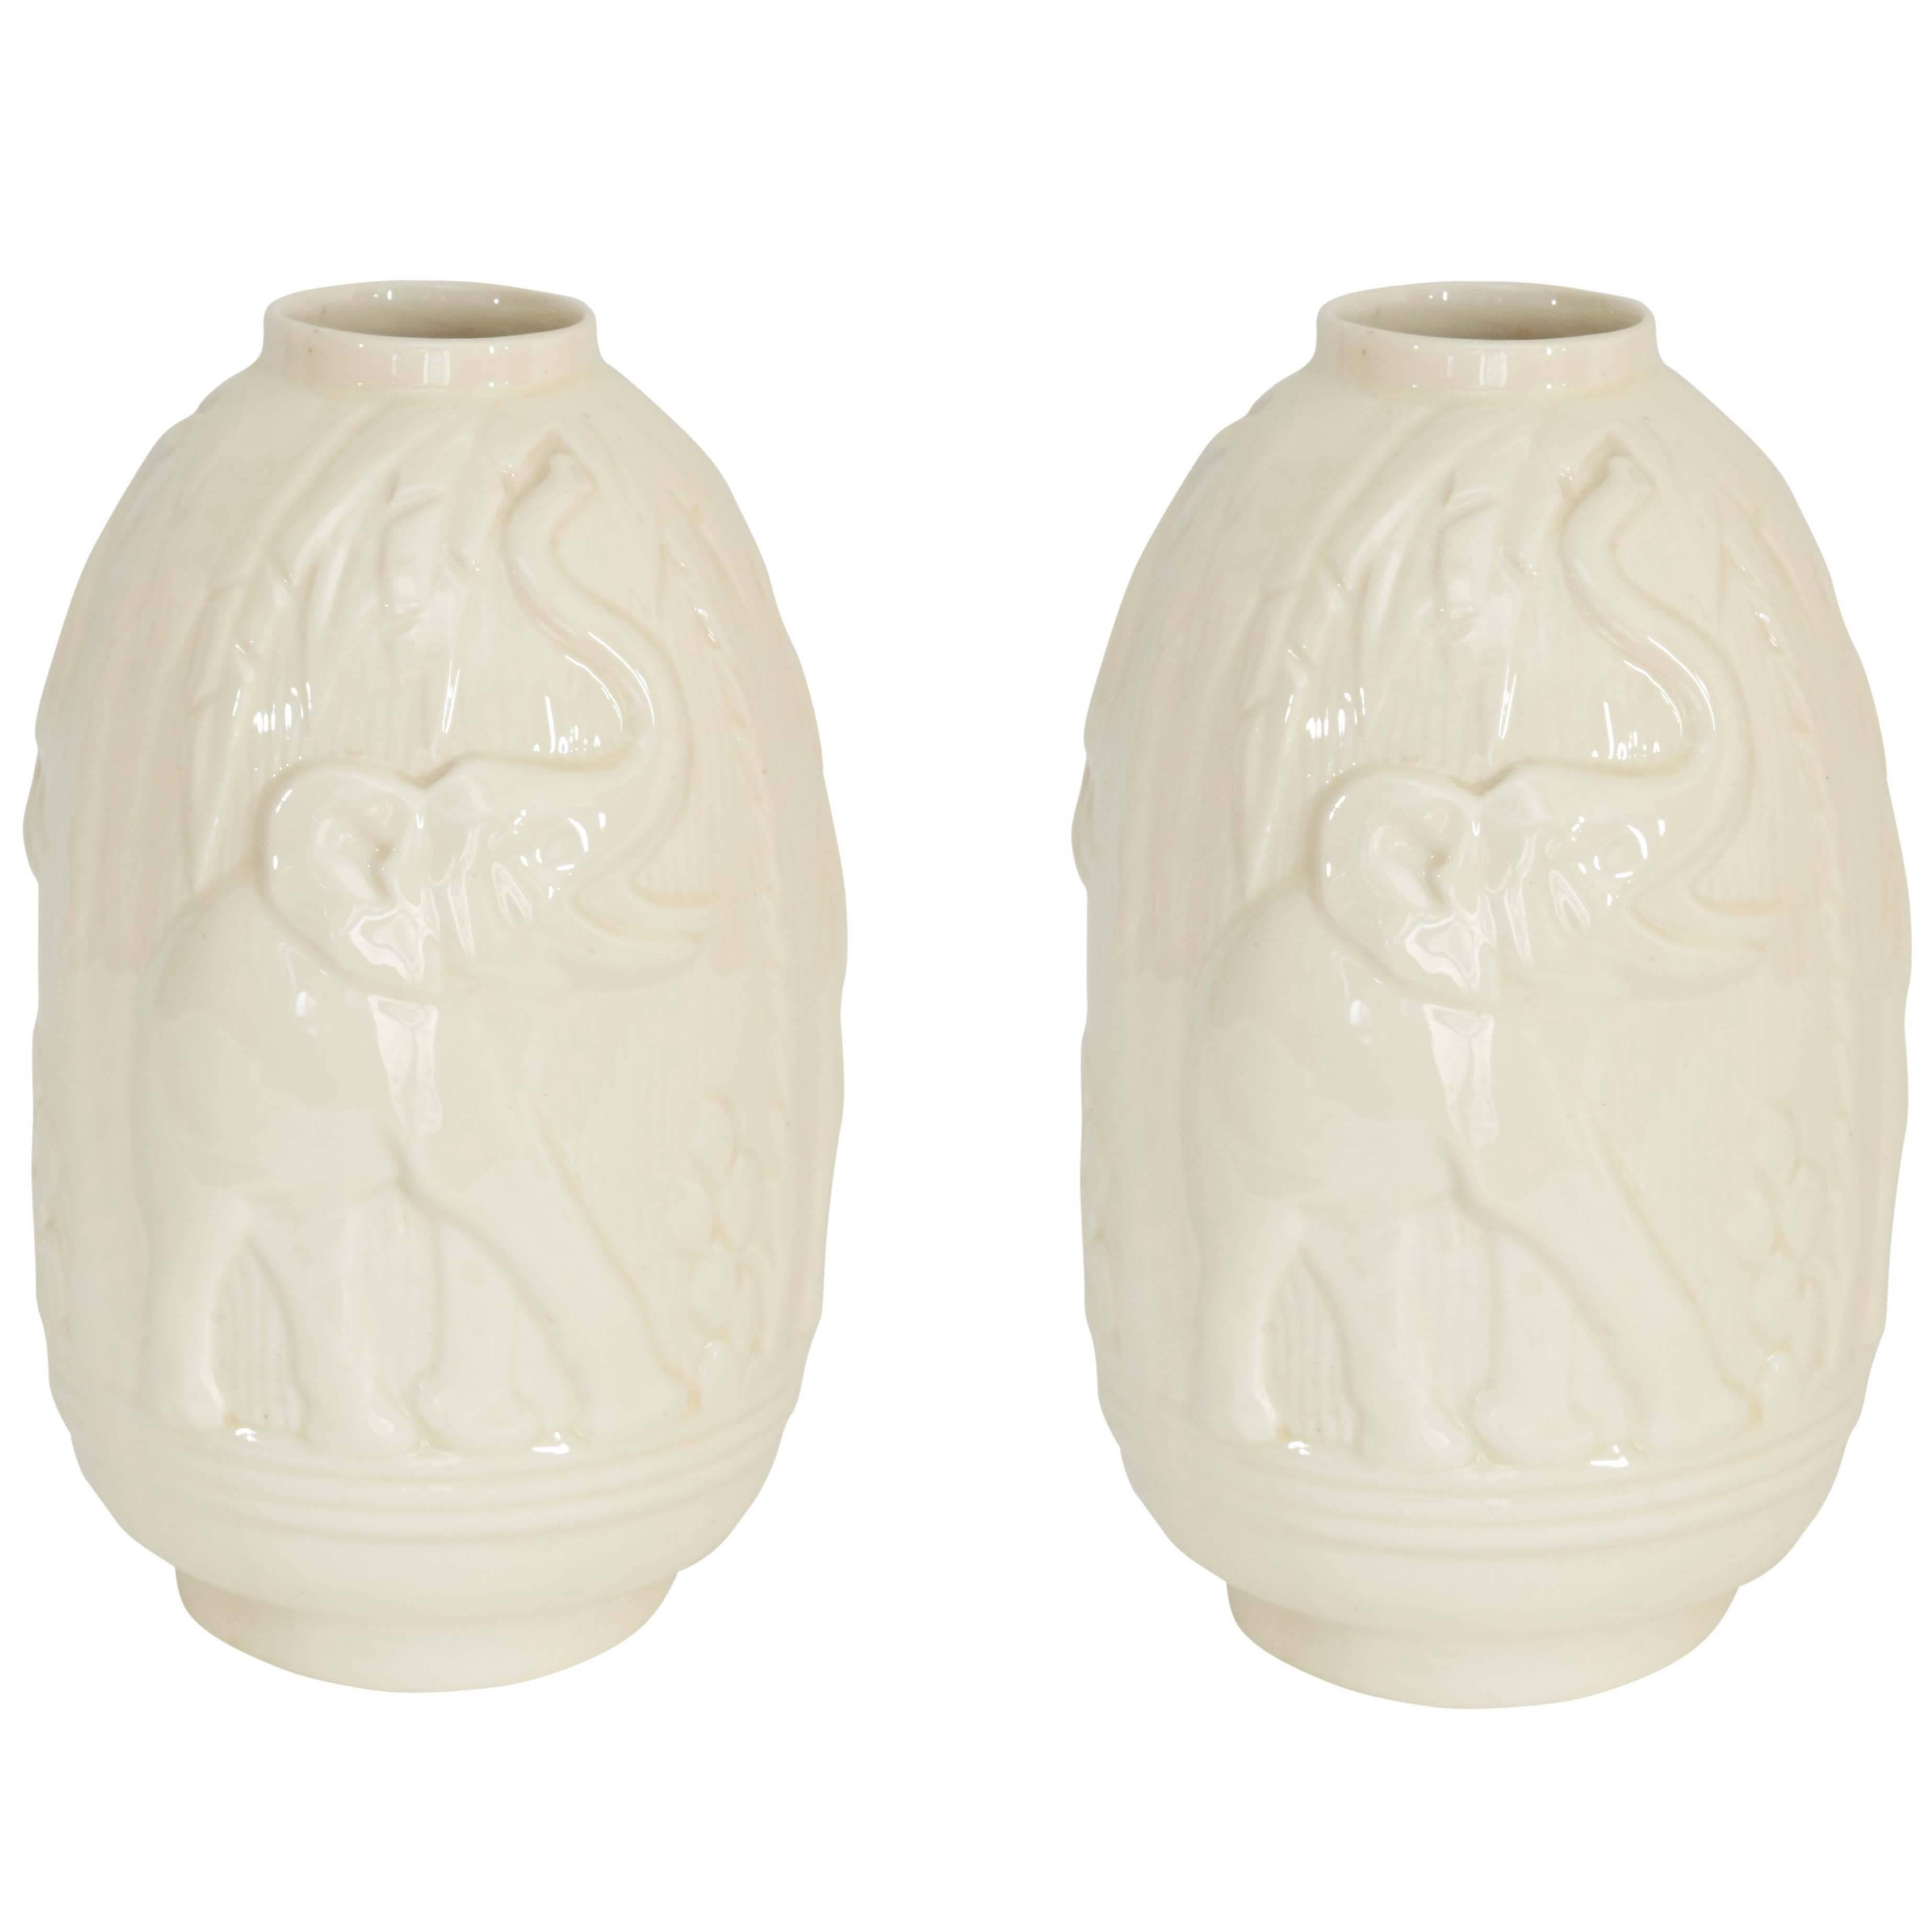 Pair of Boch La Louviere Ceramic Vases with Elephants